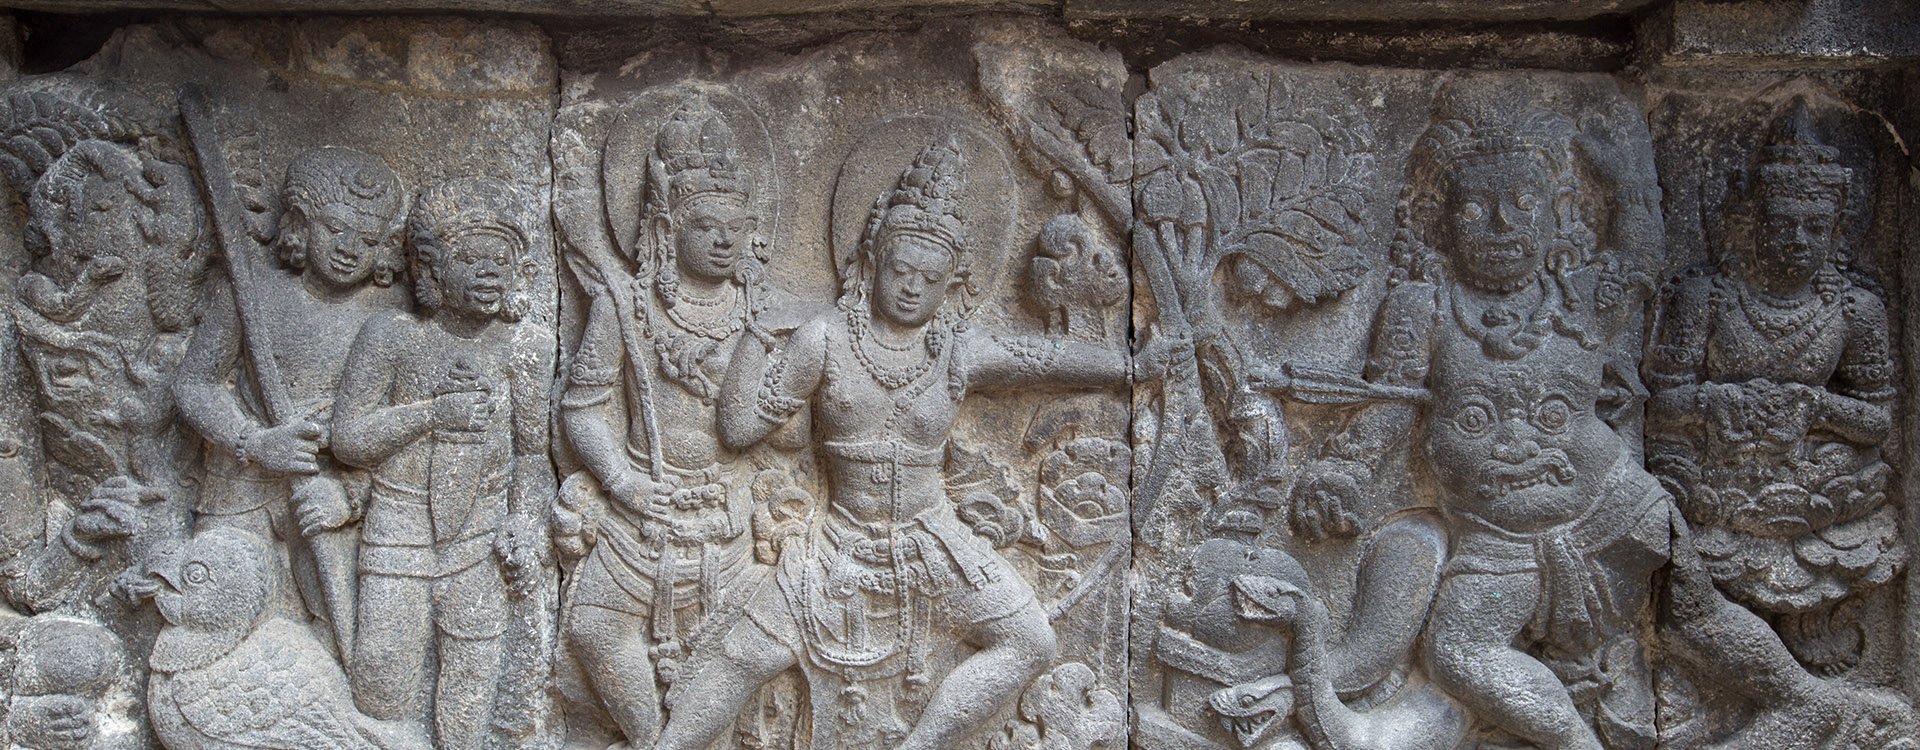 Detail of carved relief at Prambanan, Java, Indonesia